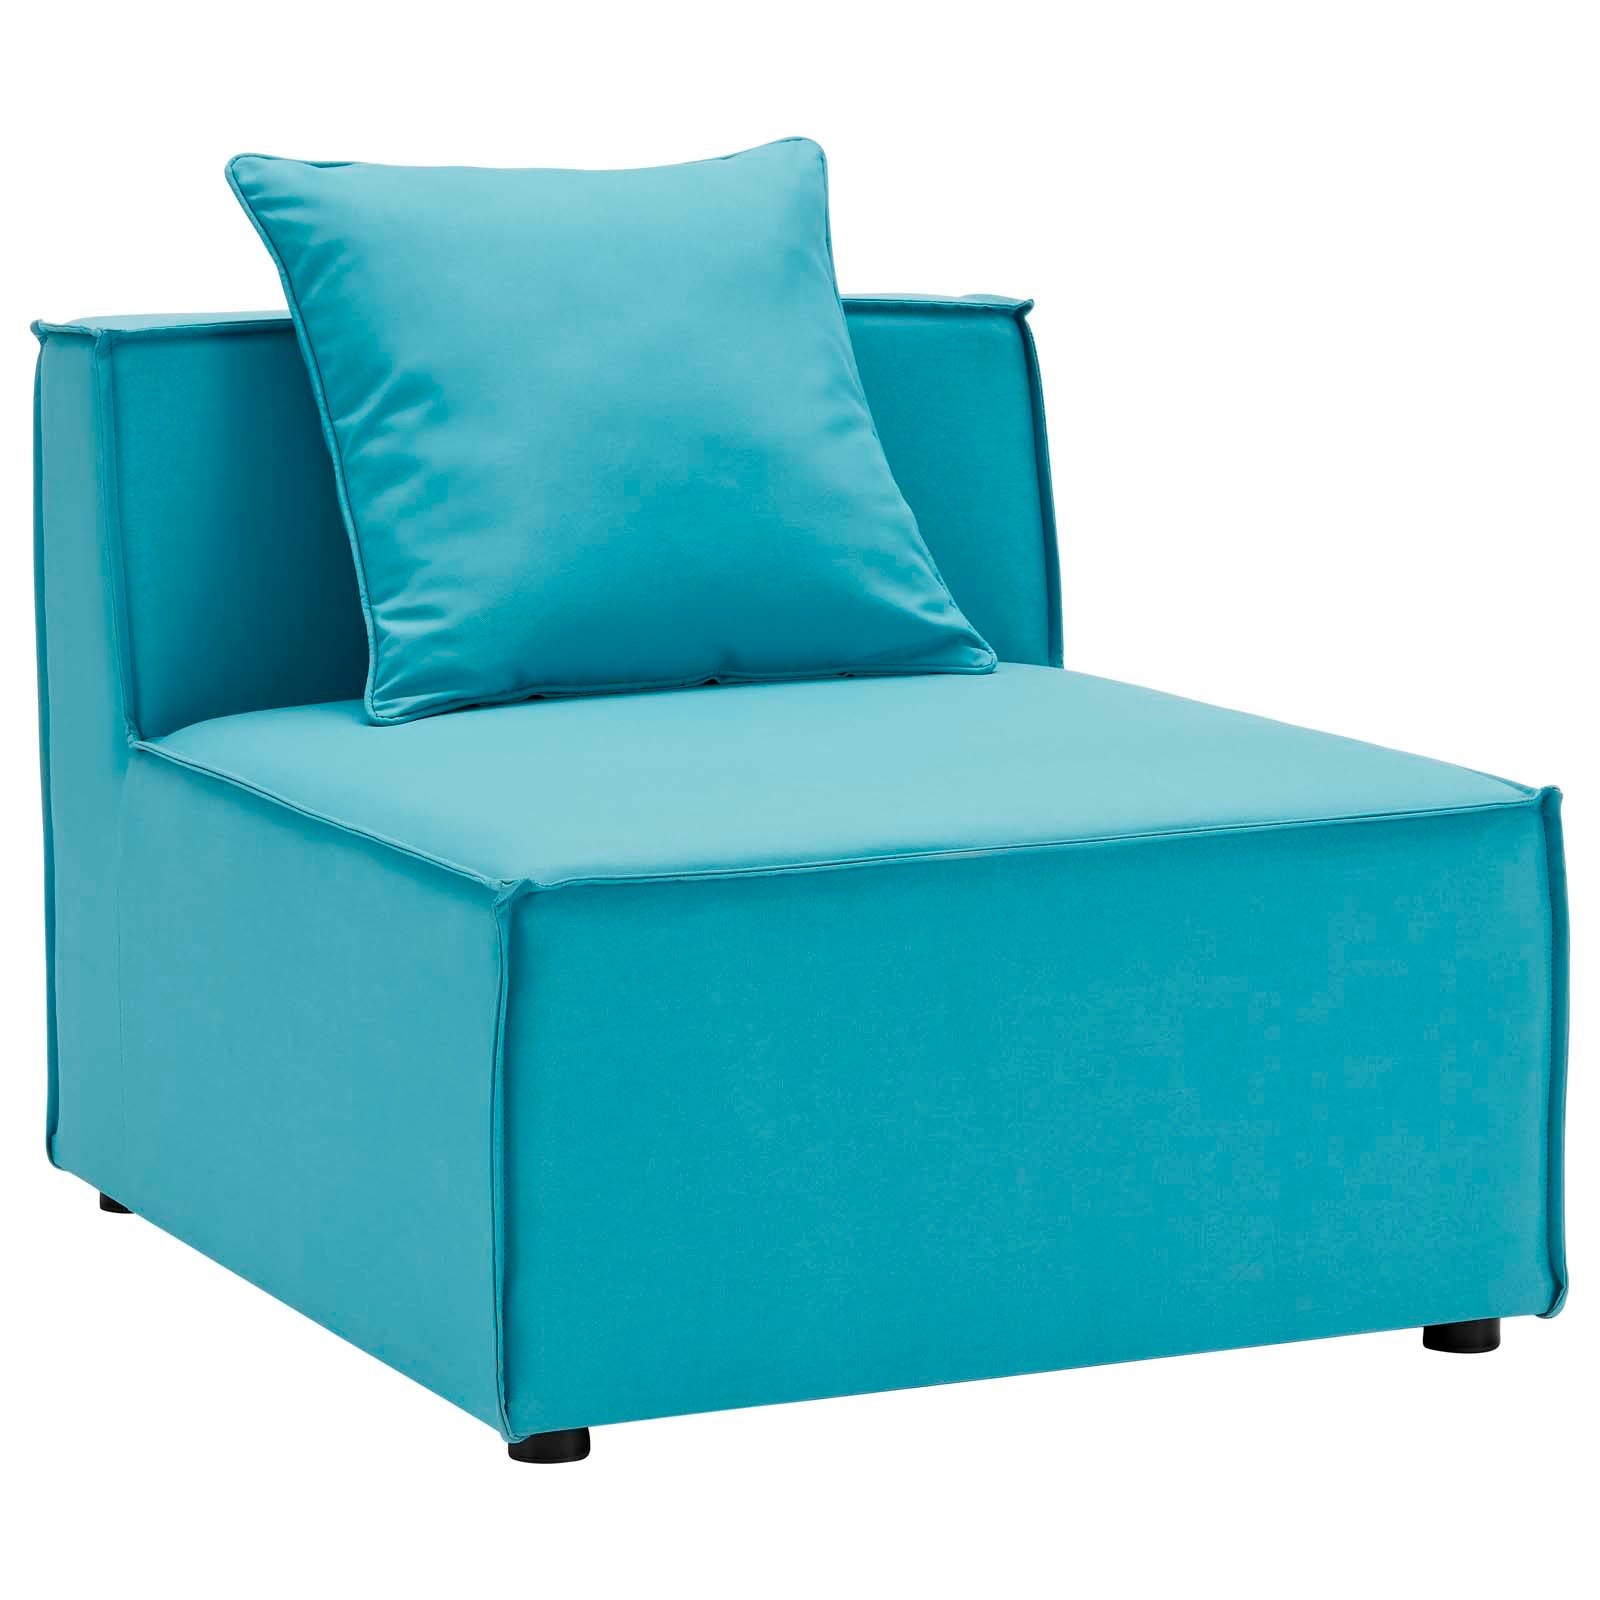 Saybrook Outdoor Patio Upholstered 6-Piece Sectional Sofa